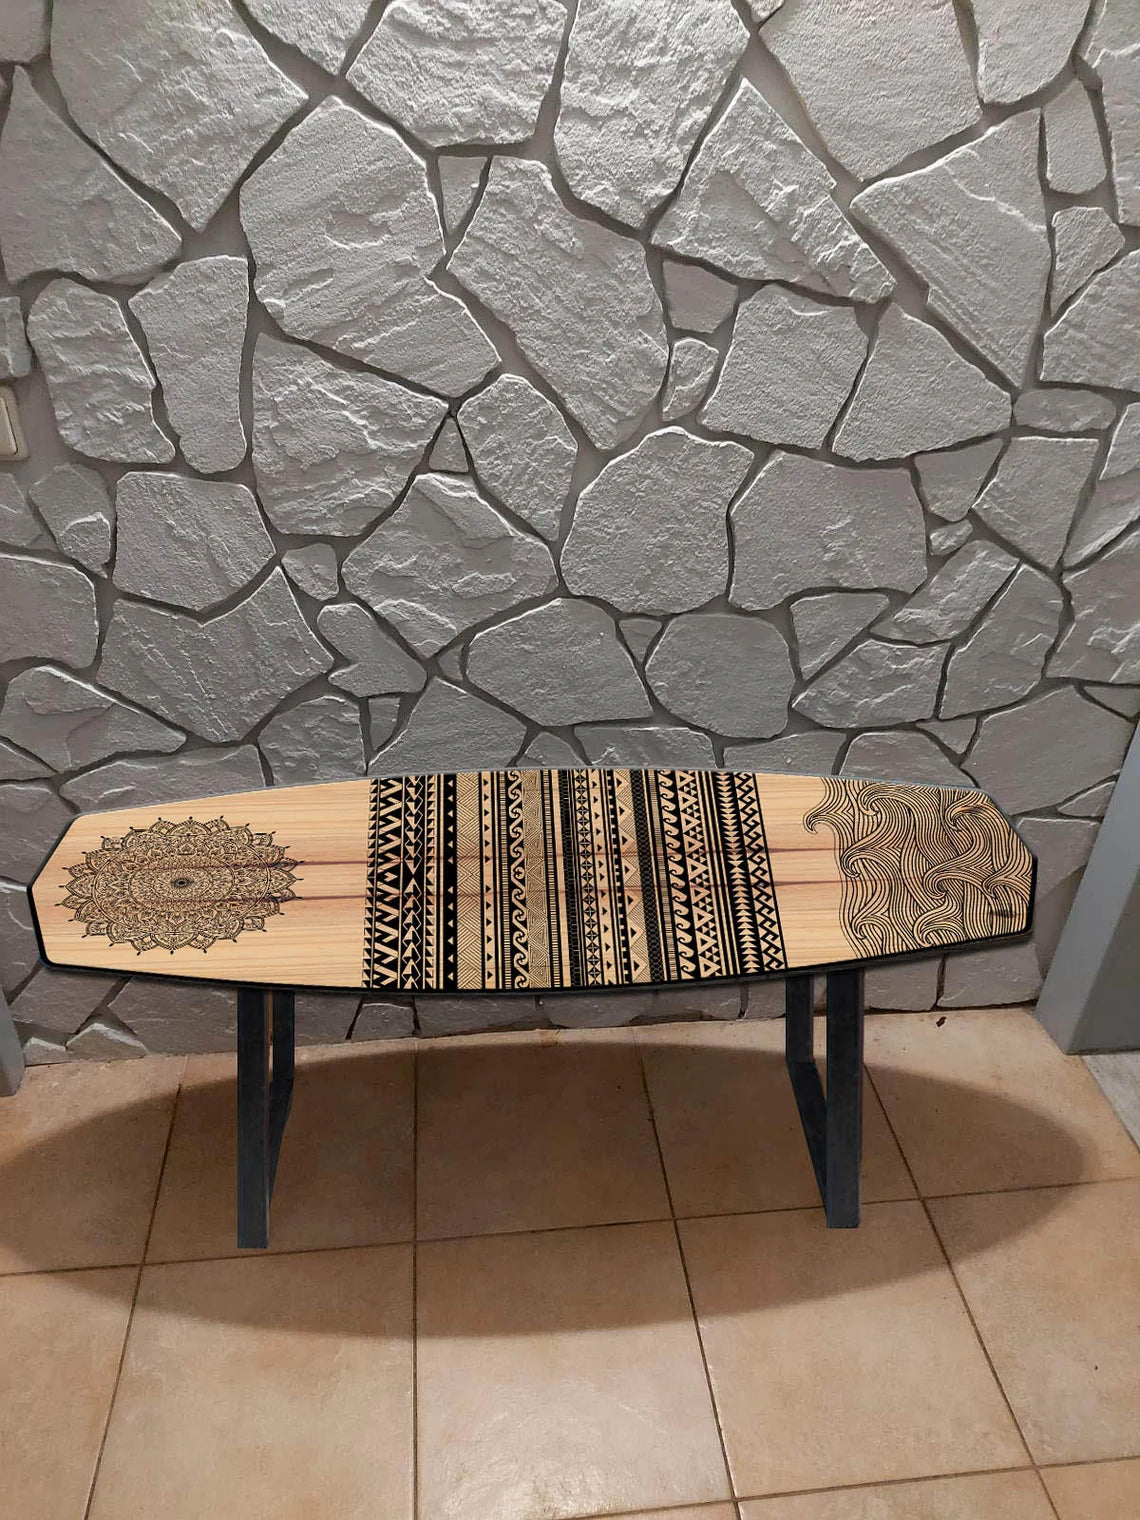 Exquisite Indoor Surf Decor Bench: Maori-inspired Patterns and Massive Metal Legs